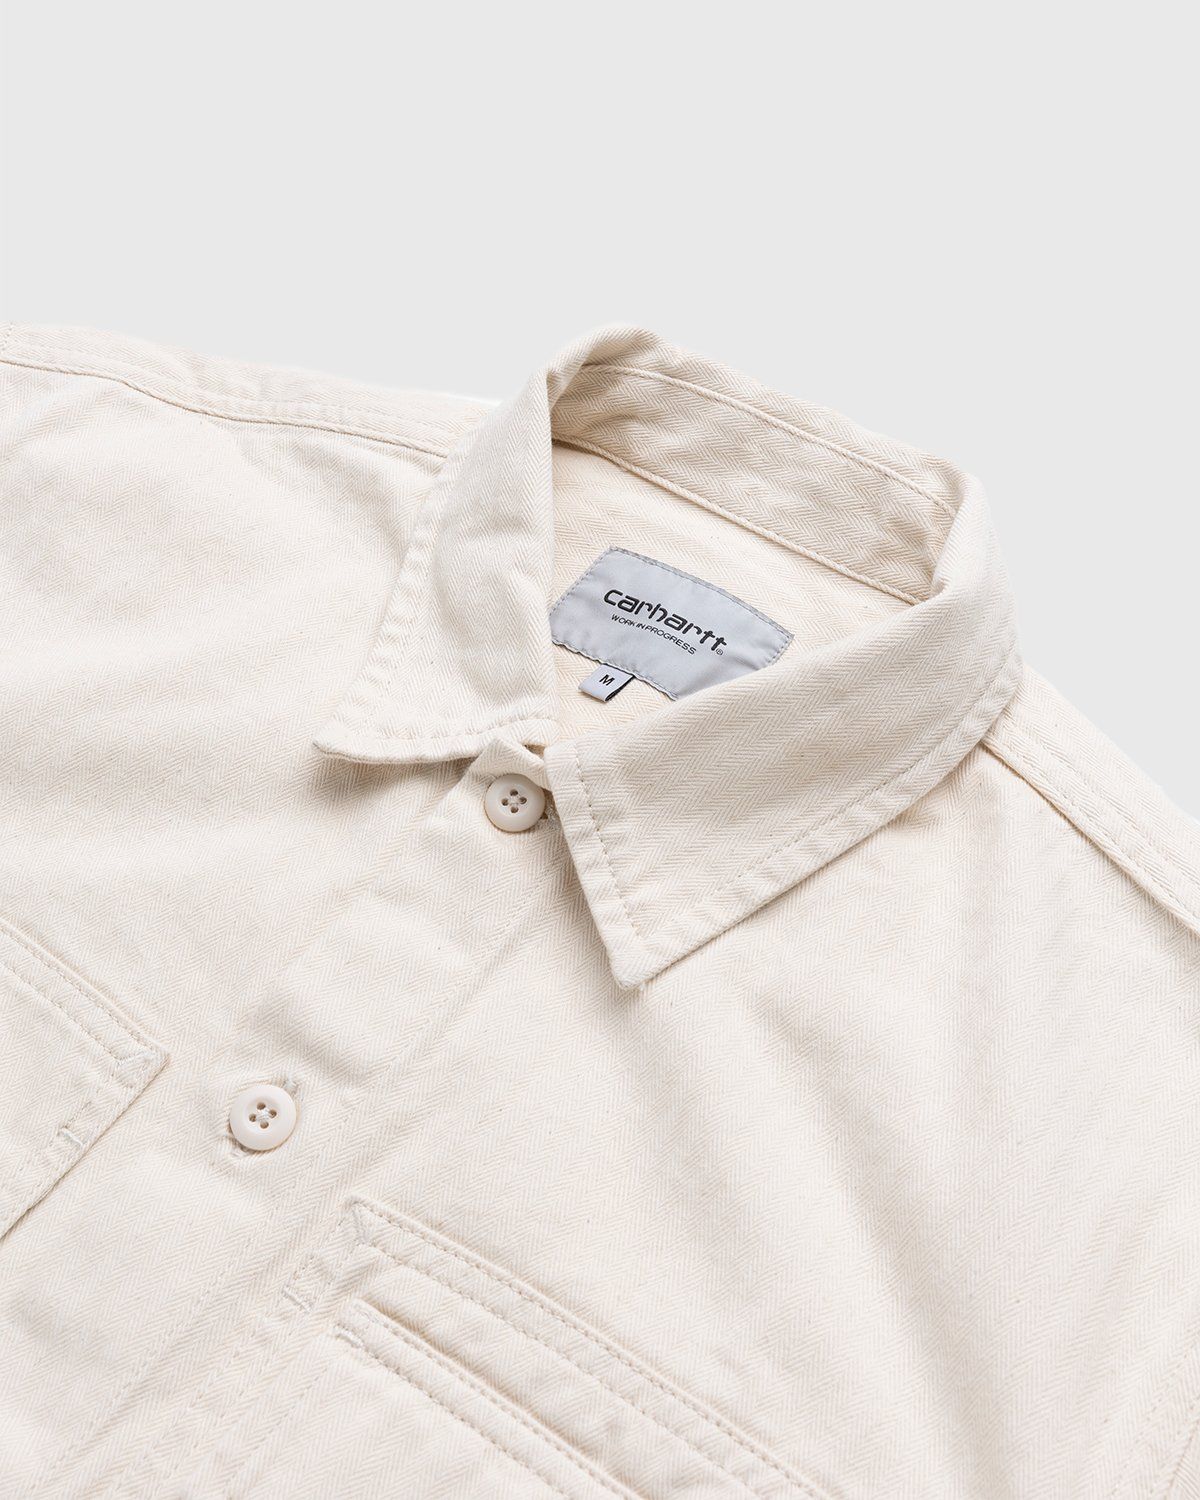 Carhartt WIP – Charter Shirt Natural - Shirts - Beige - Image 3